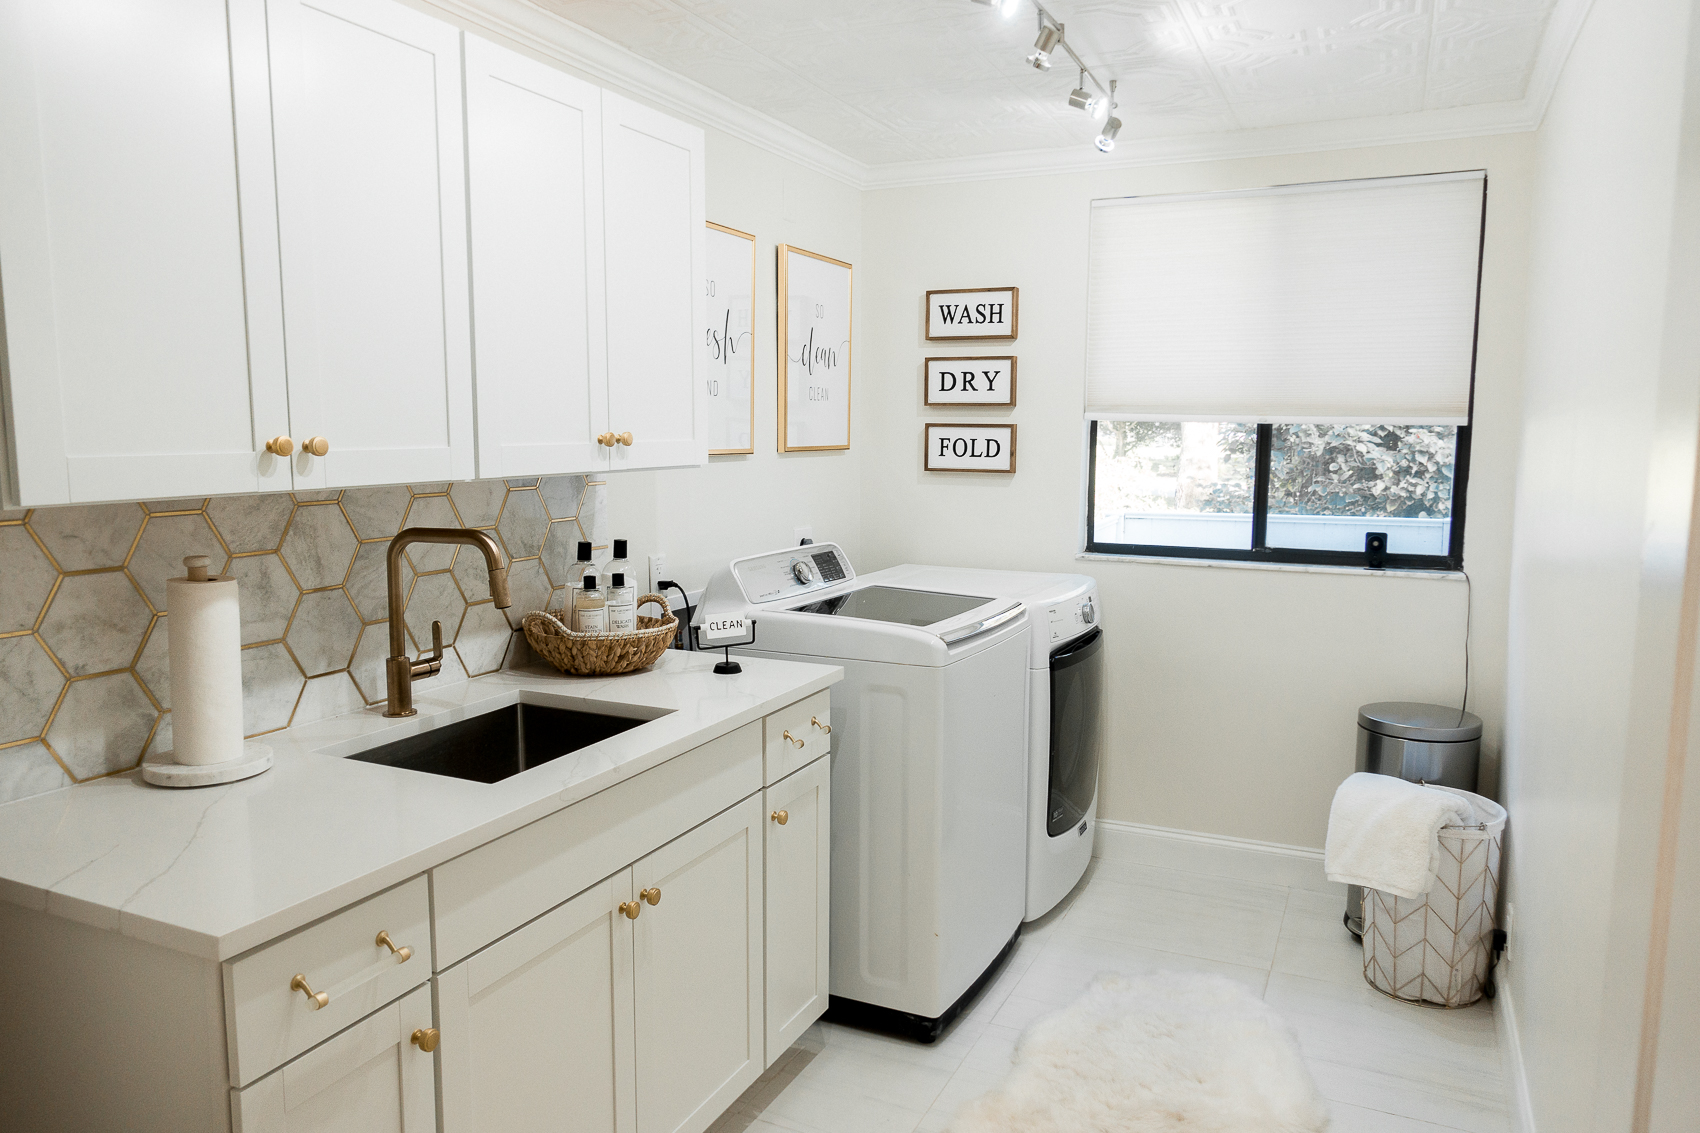 Laundry Room Decor Ideas  A Glam Lifestyle  Fashion & Lifestyle Blog